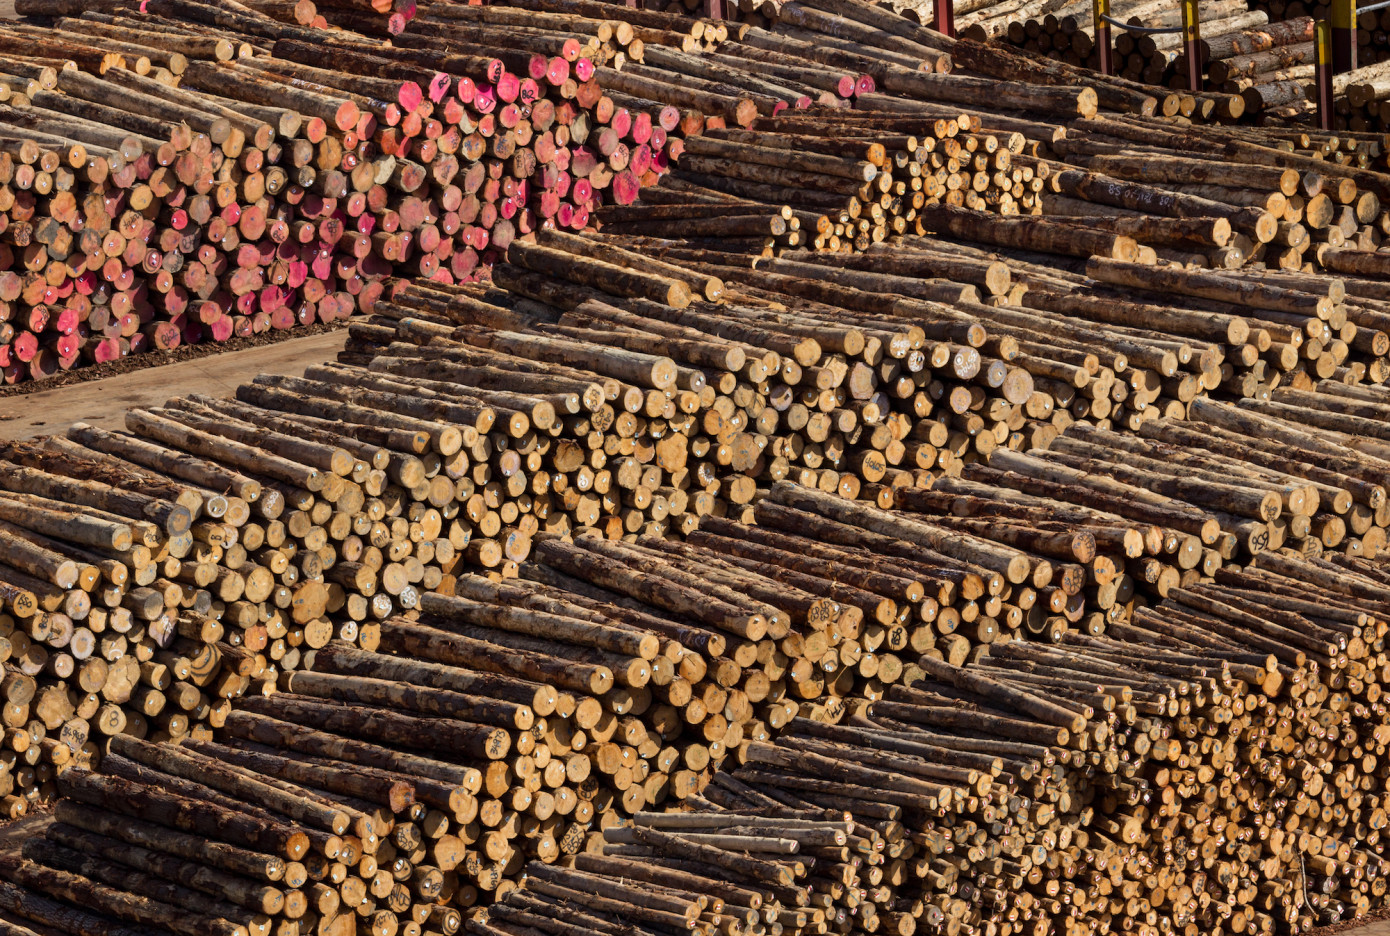 Brazilian export logs price increases 7% in April